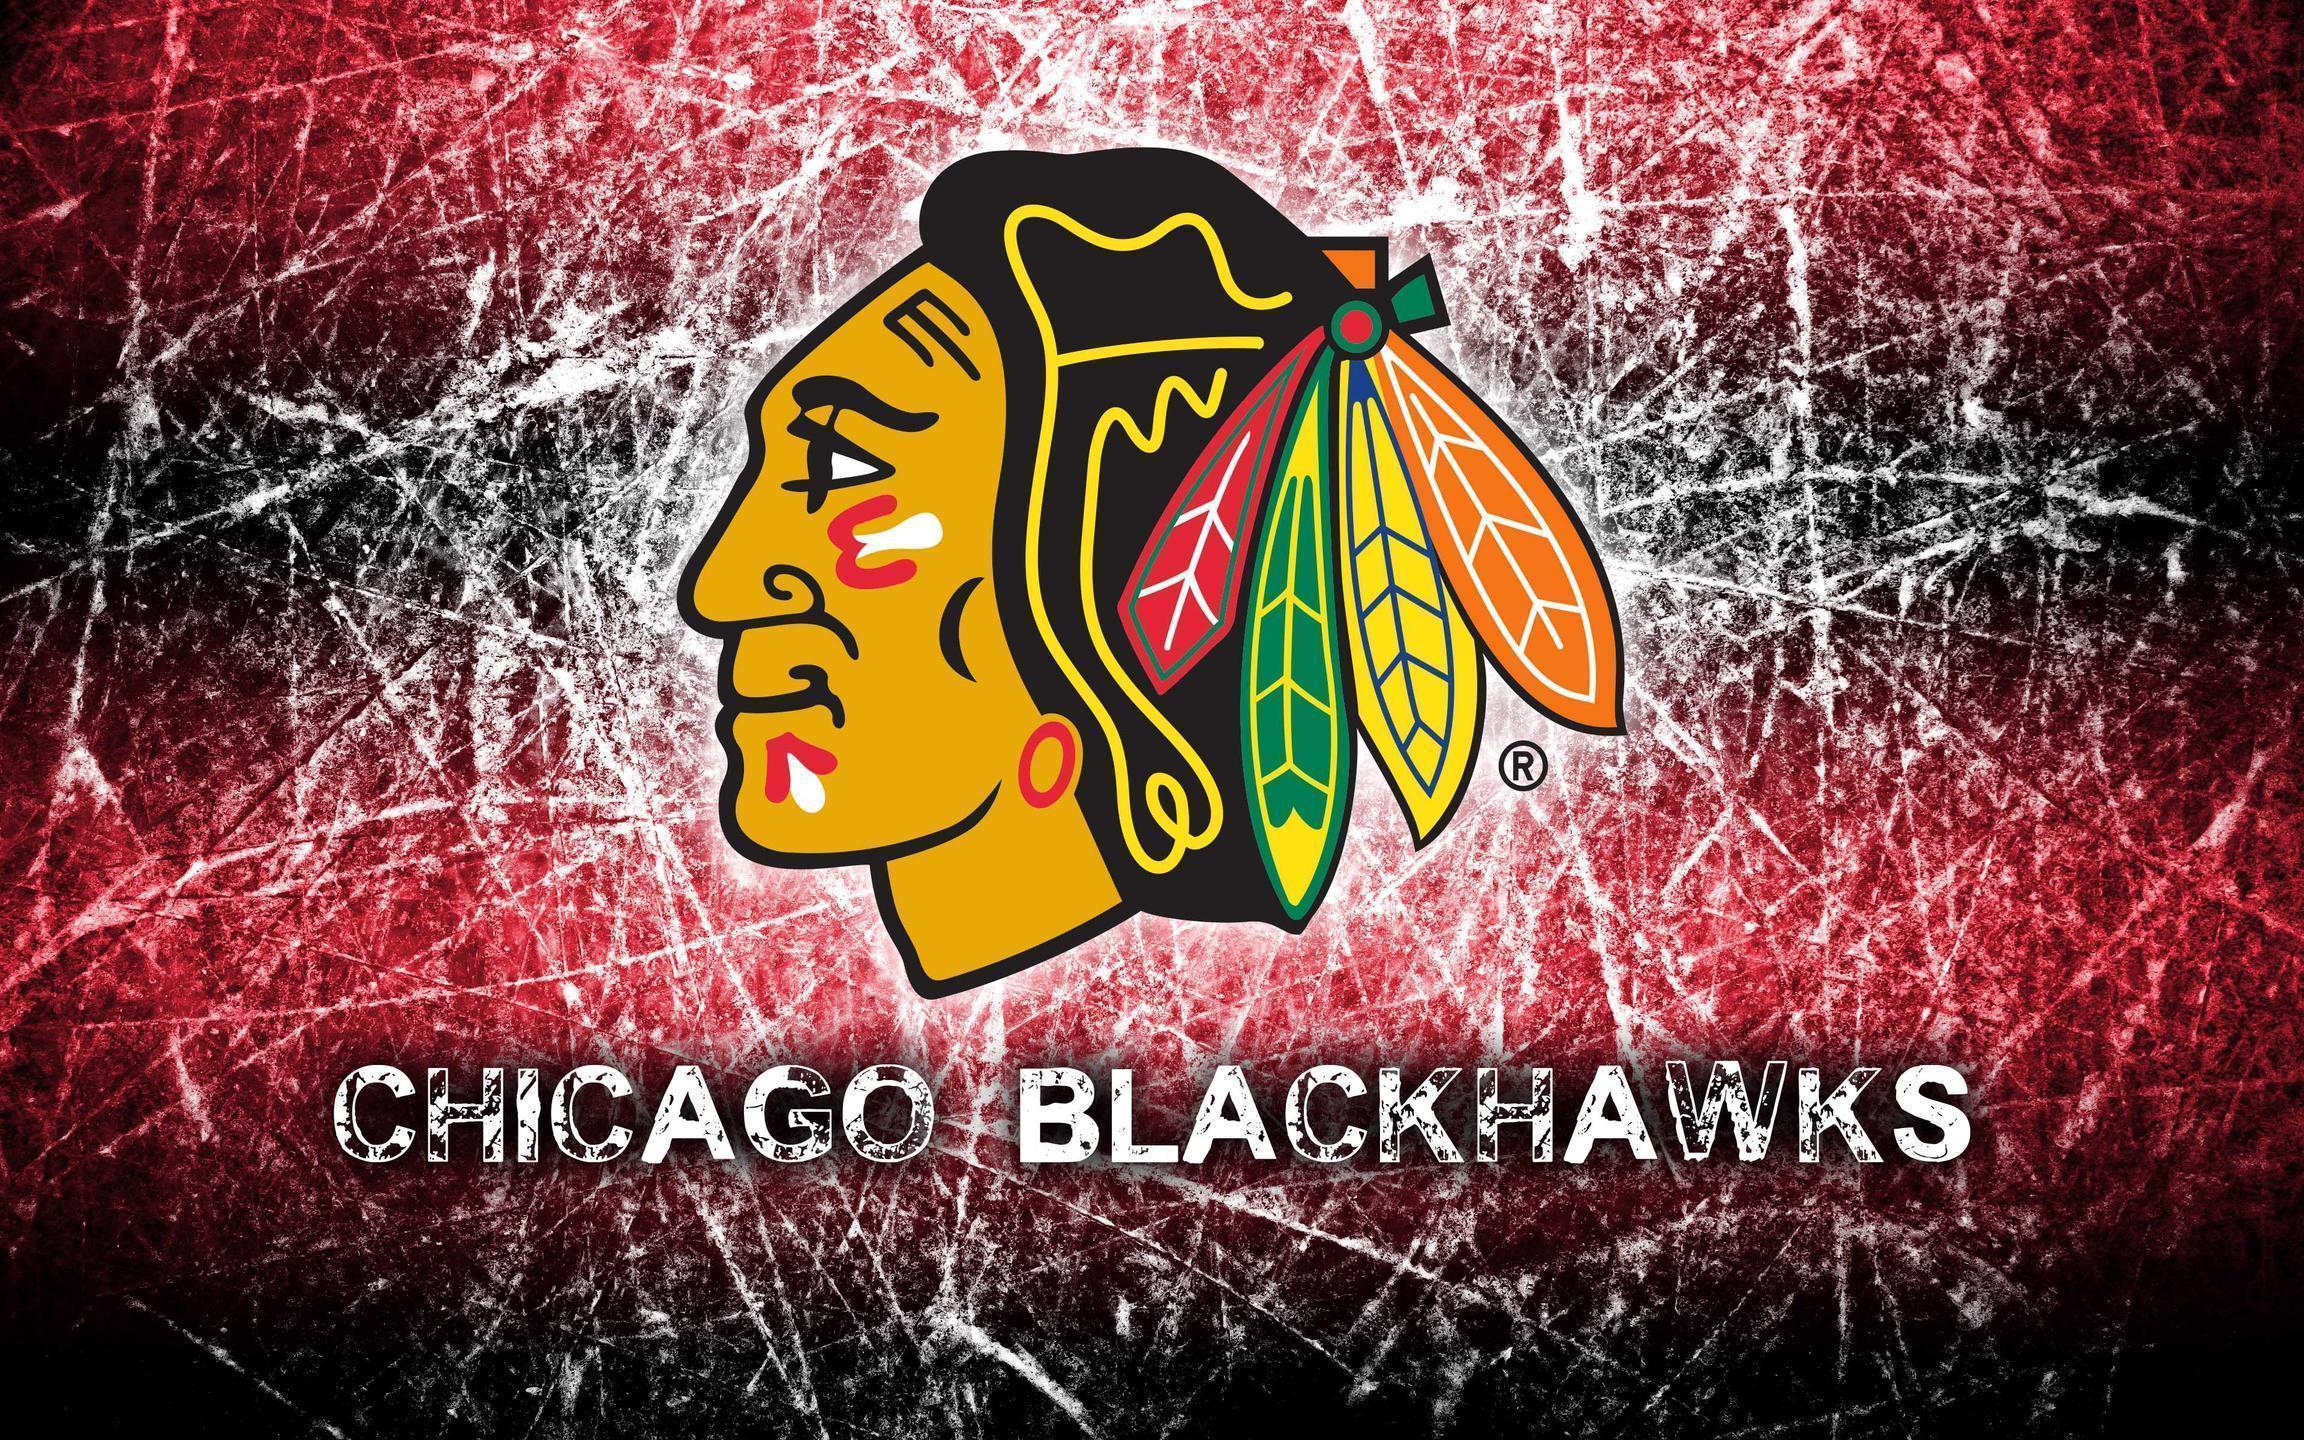 Chicago Blackhawks 2014 Logo Wallpaper Wide or HD